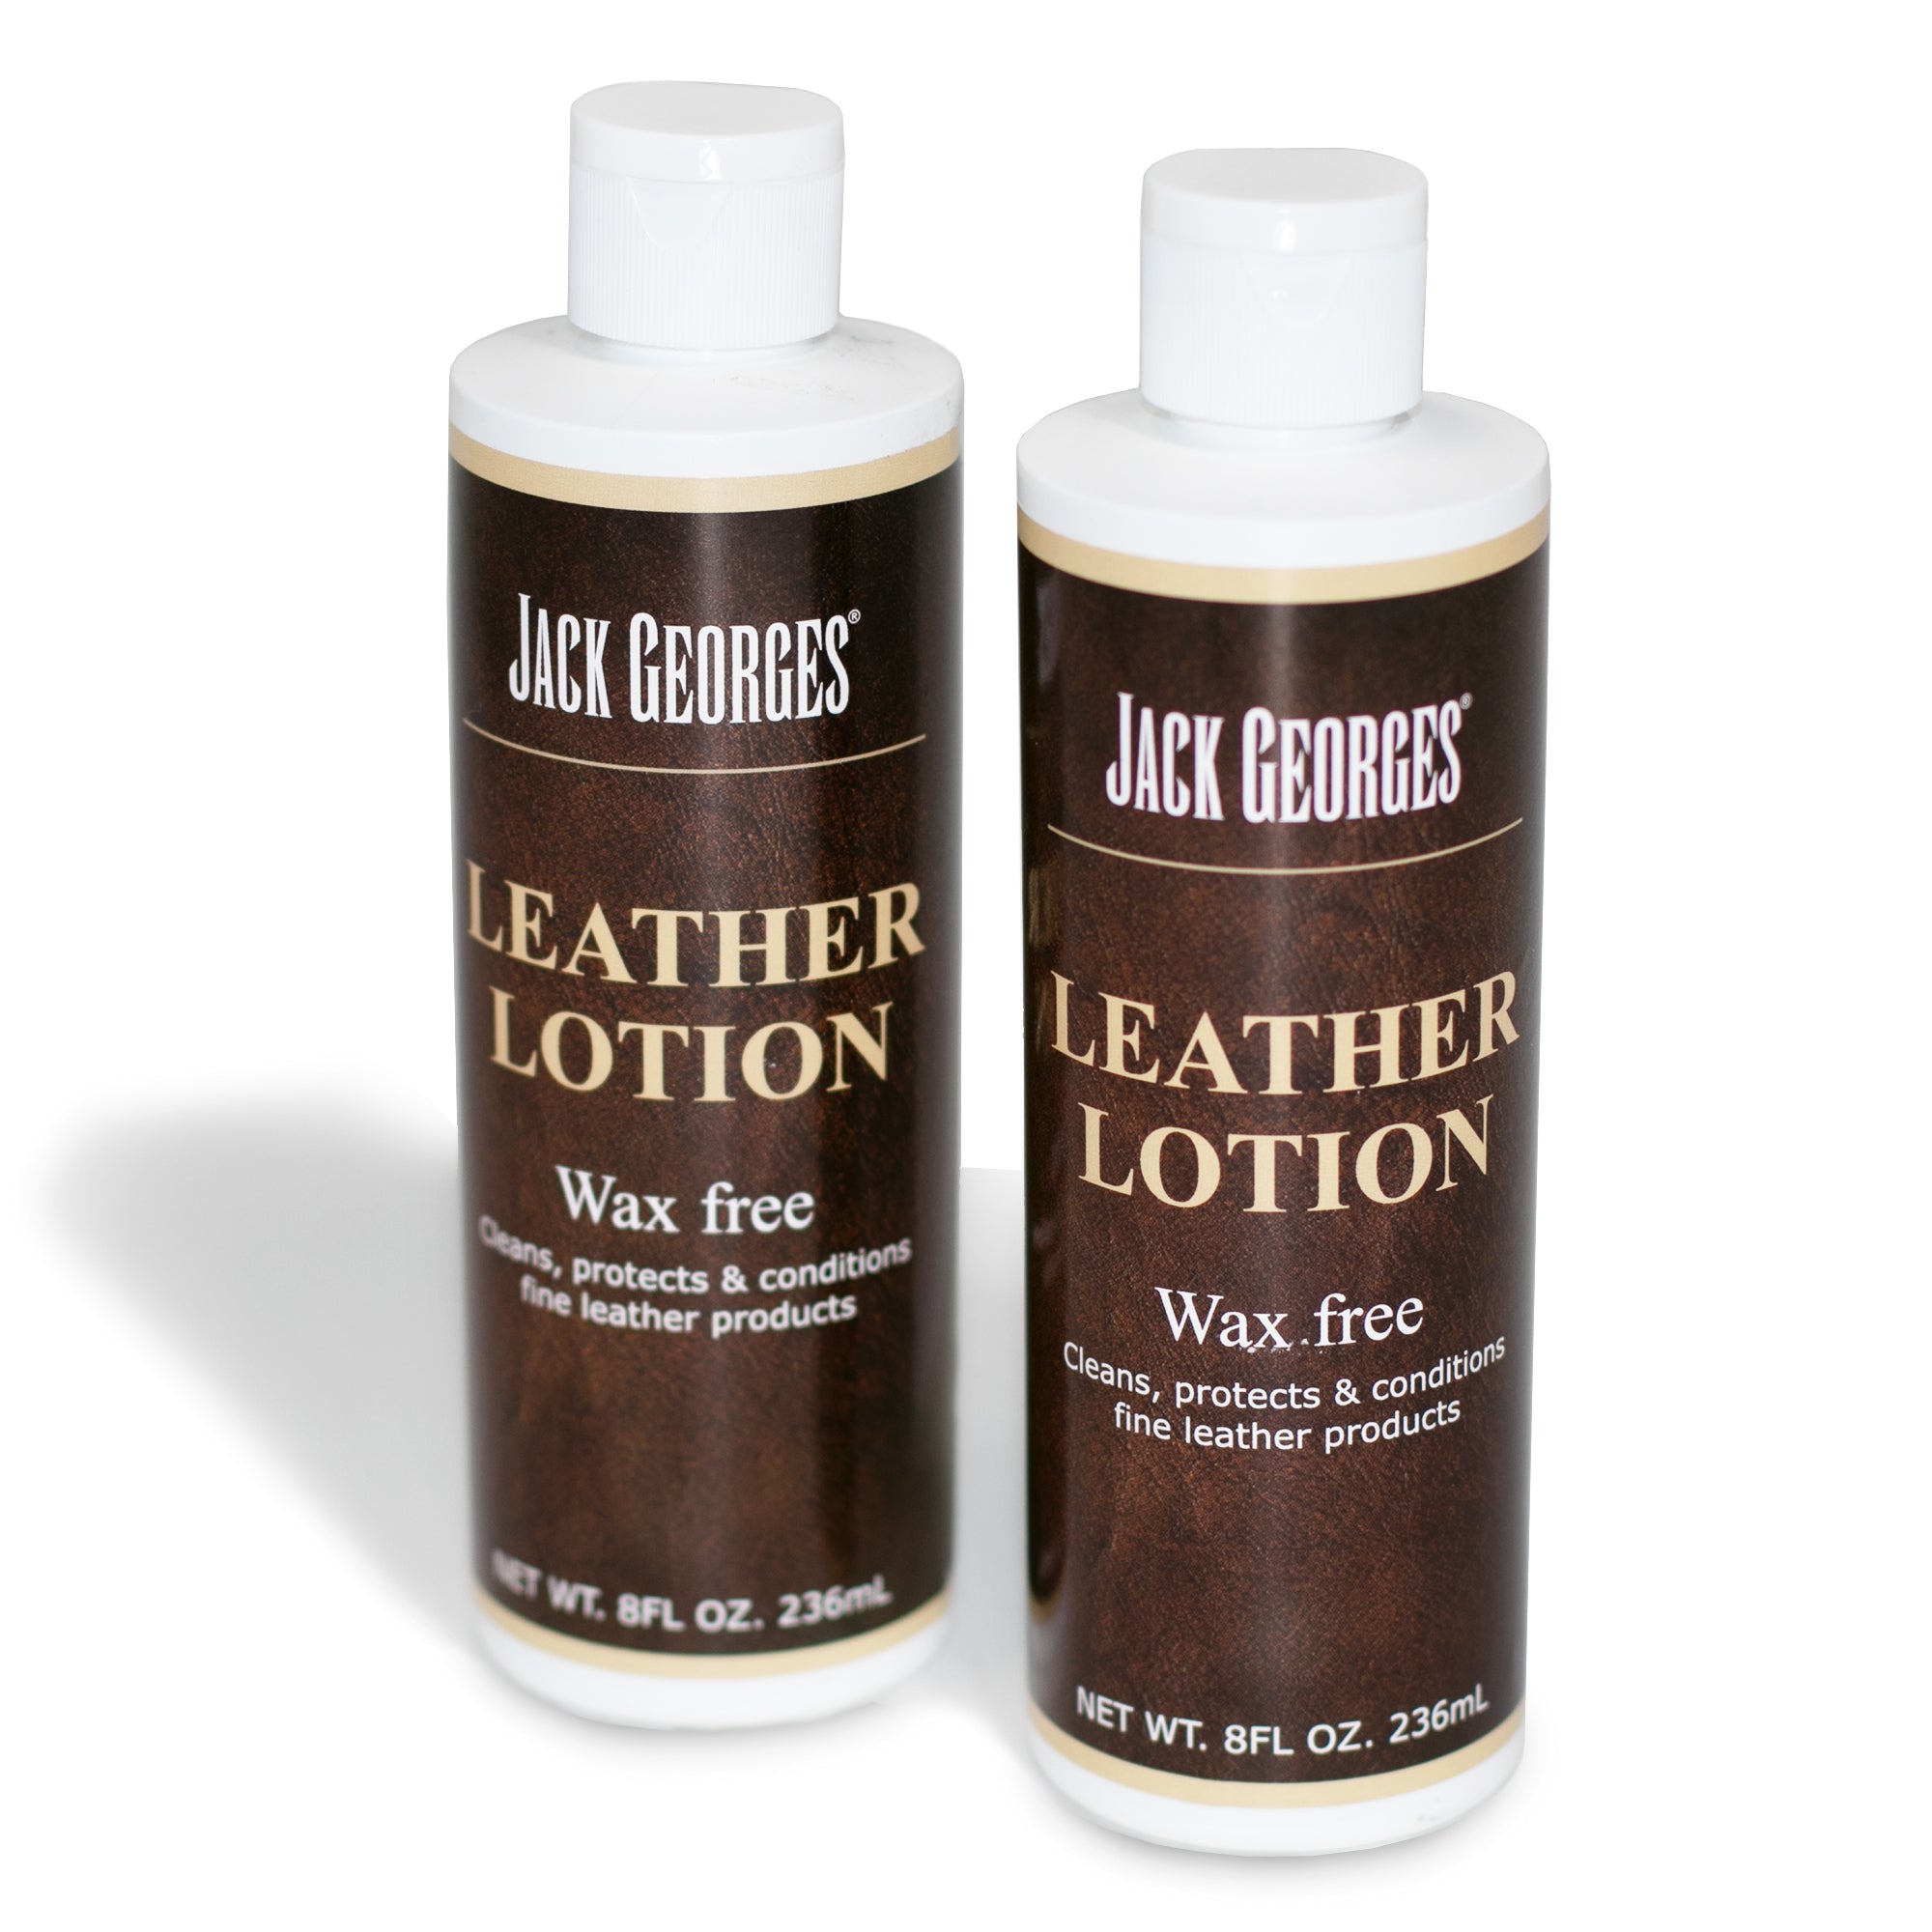 Jack Georges Leather Lotion (2 bottles)